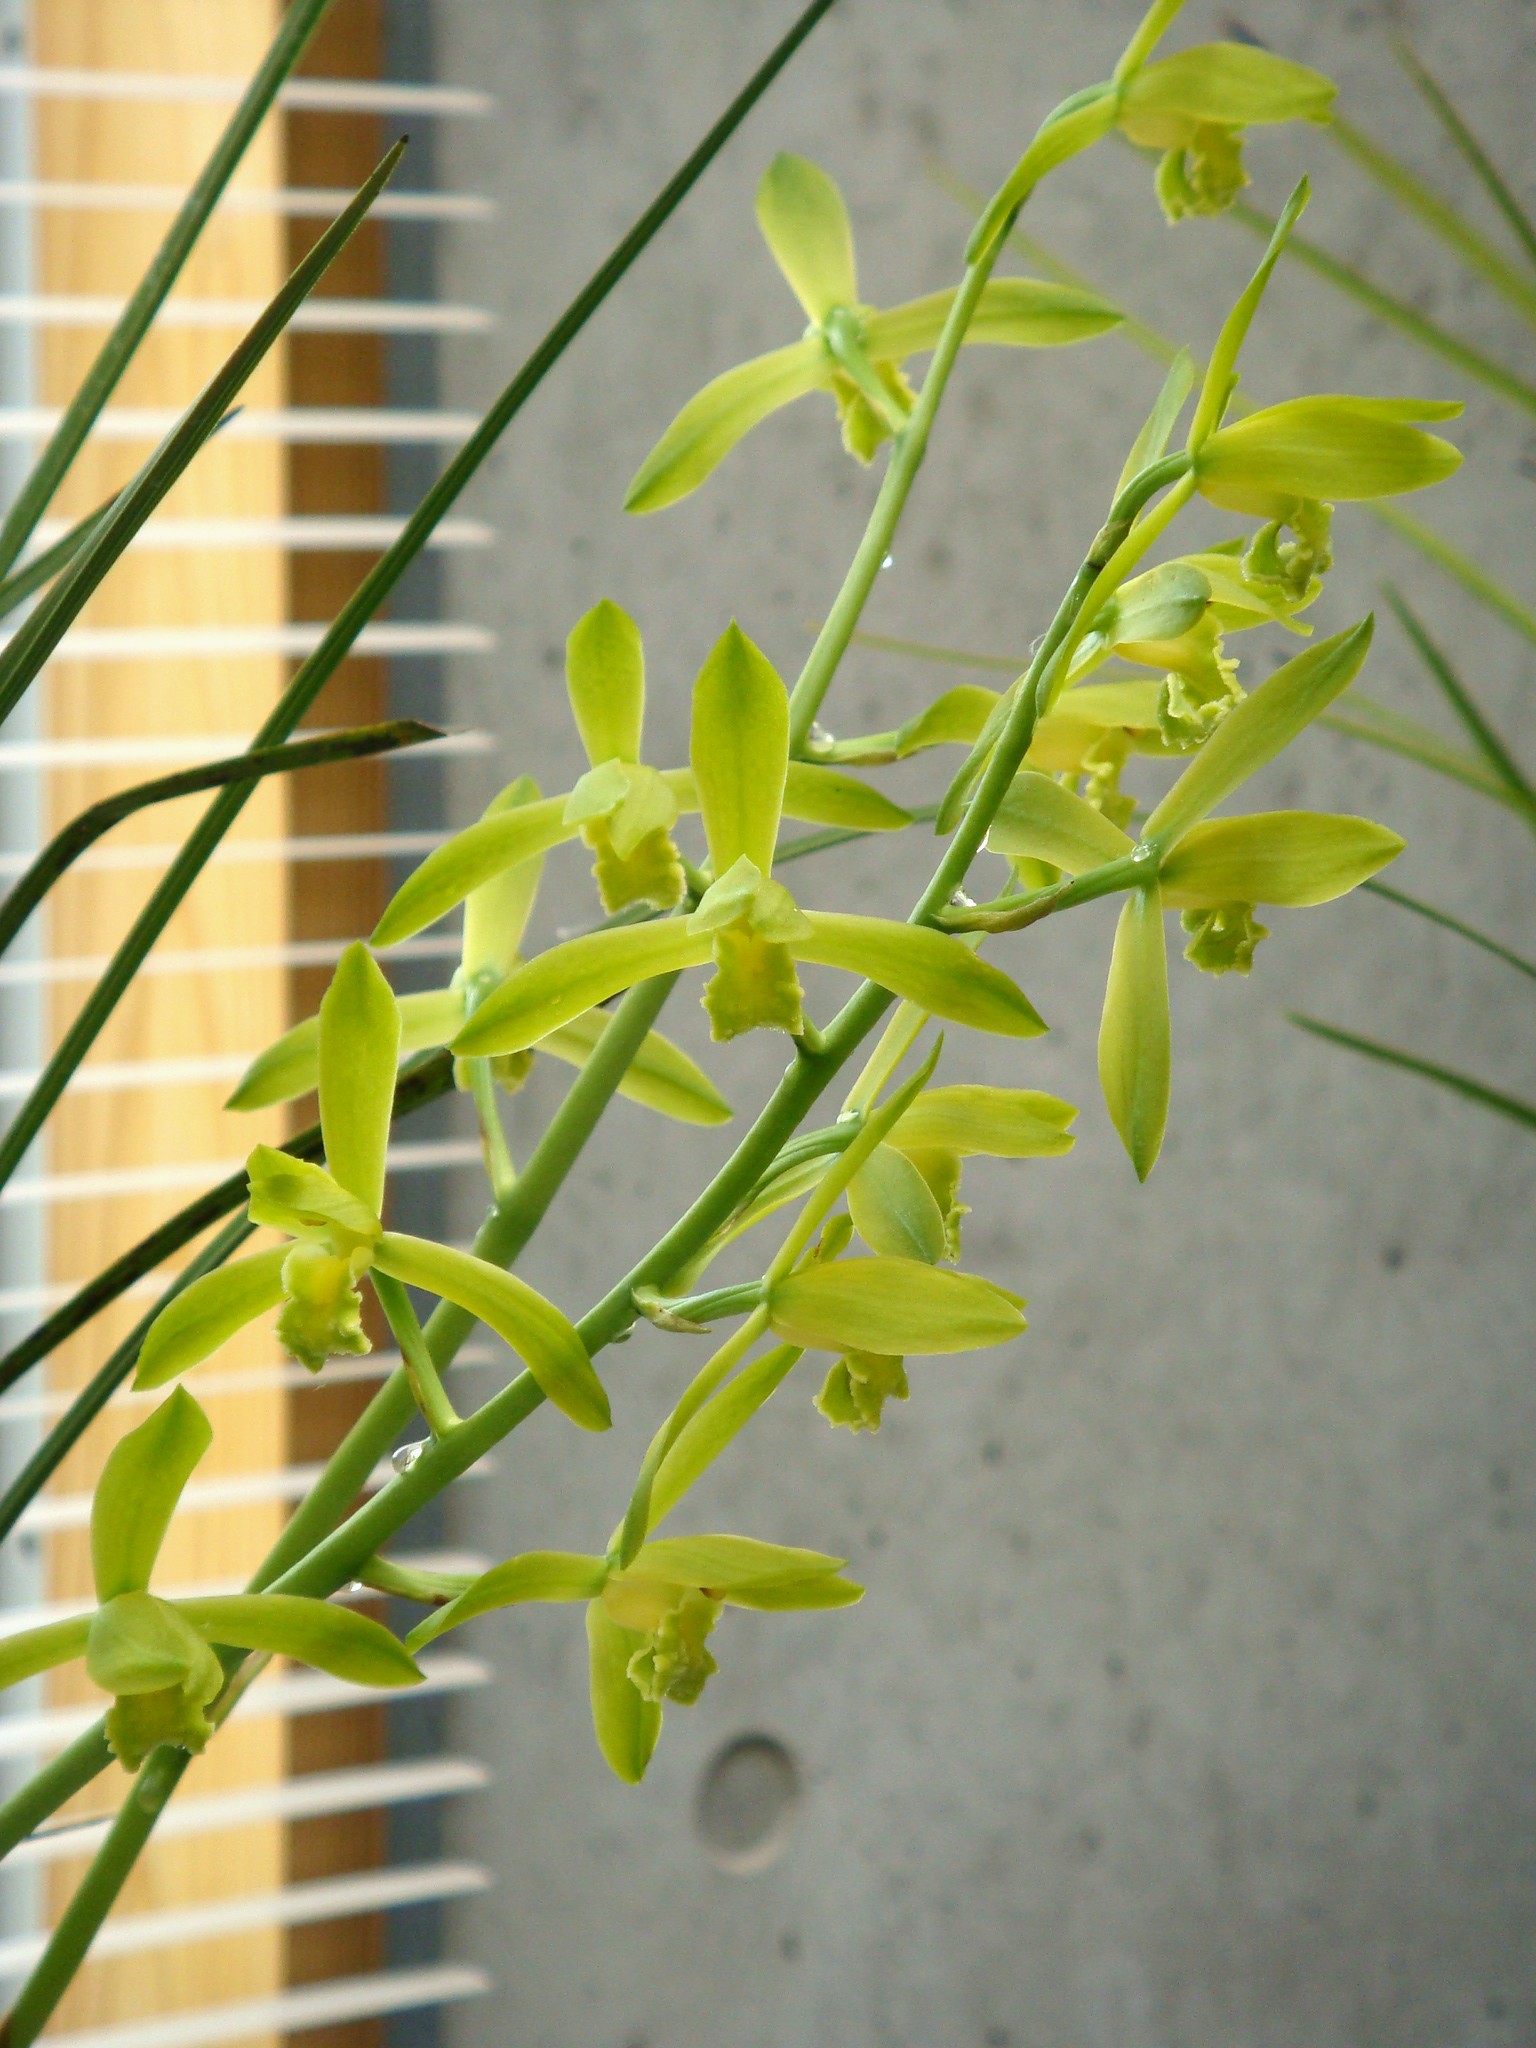 http://orchids.la.coocan.jp/Cymbidium/Cymbidium%20faberi/DSC02995.JPG